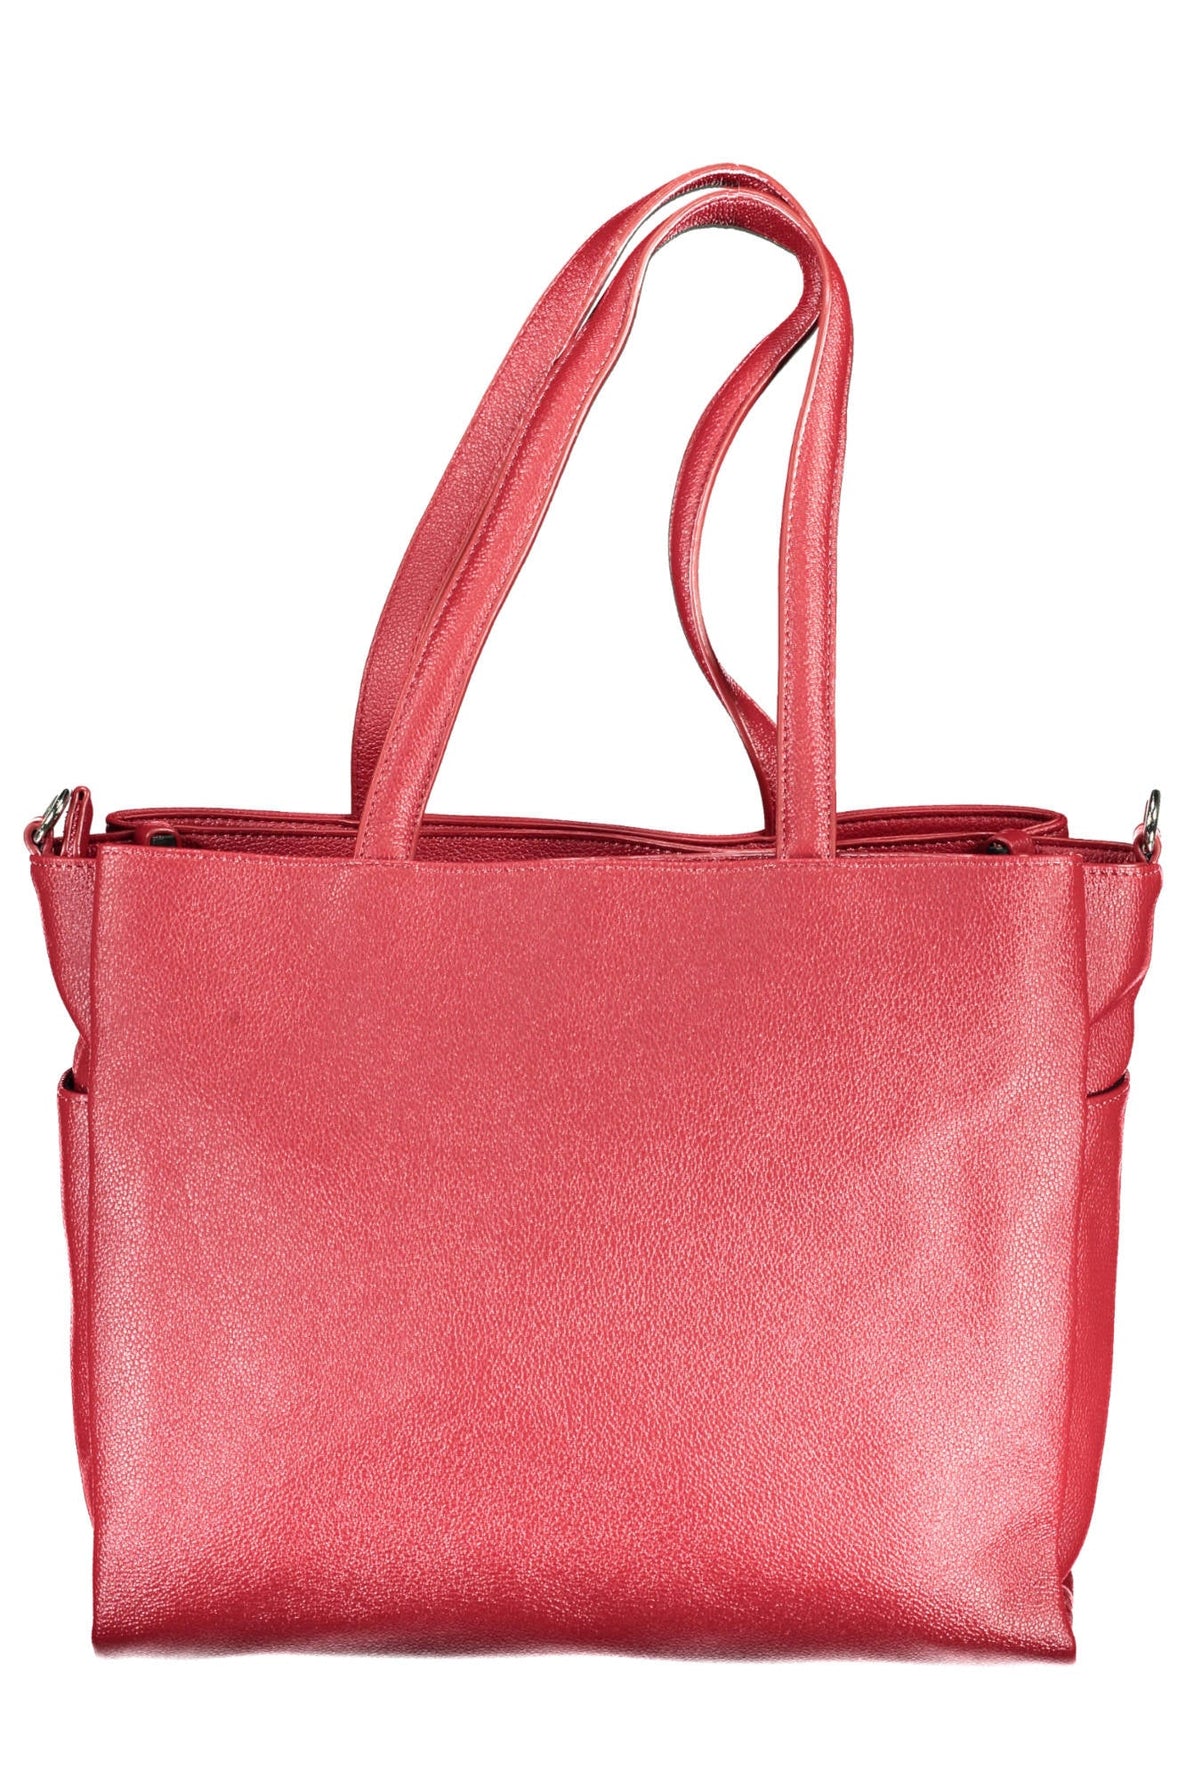 Red women's bag